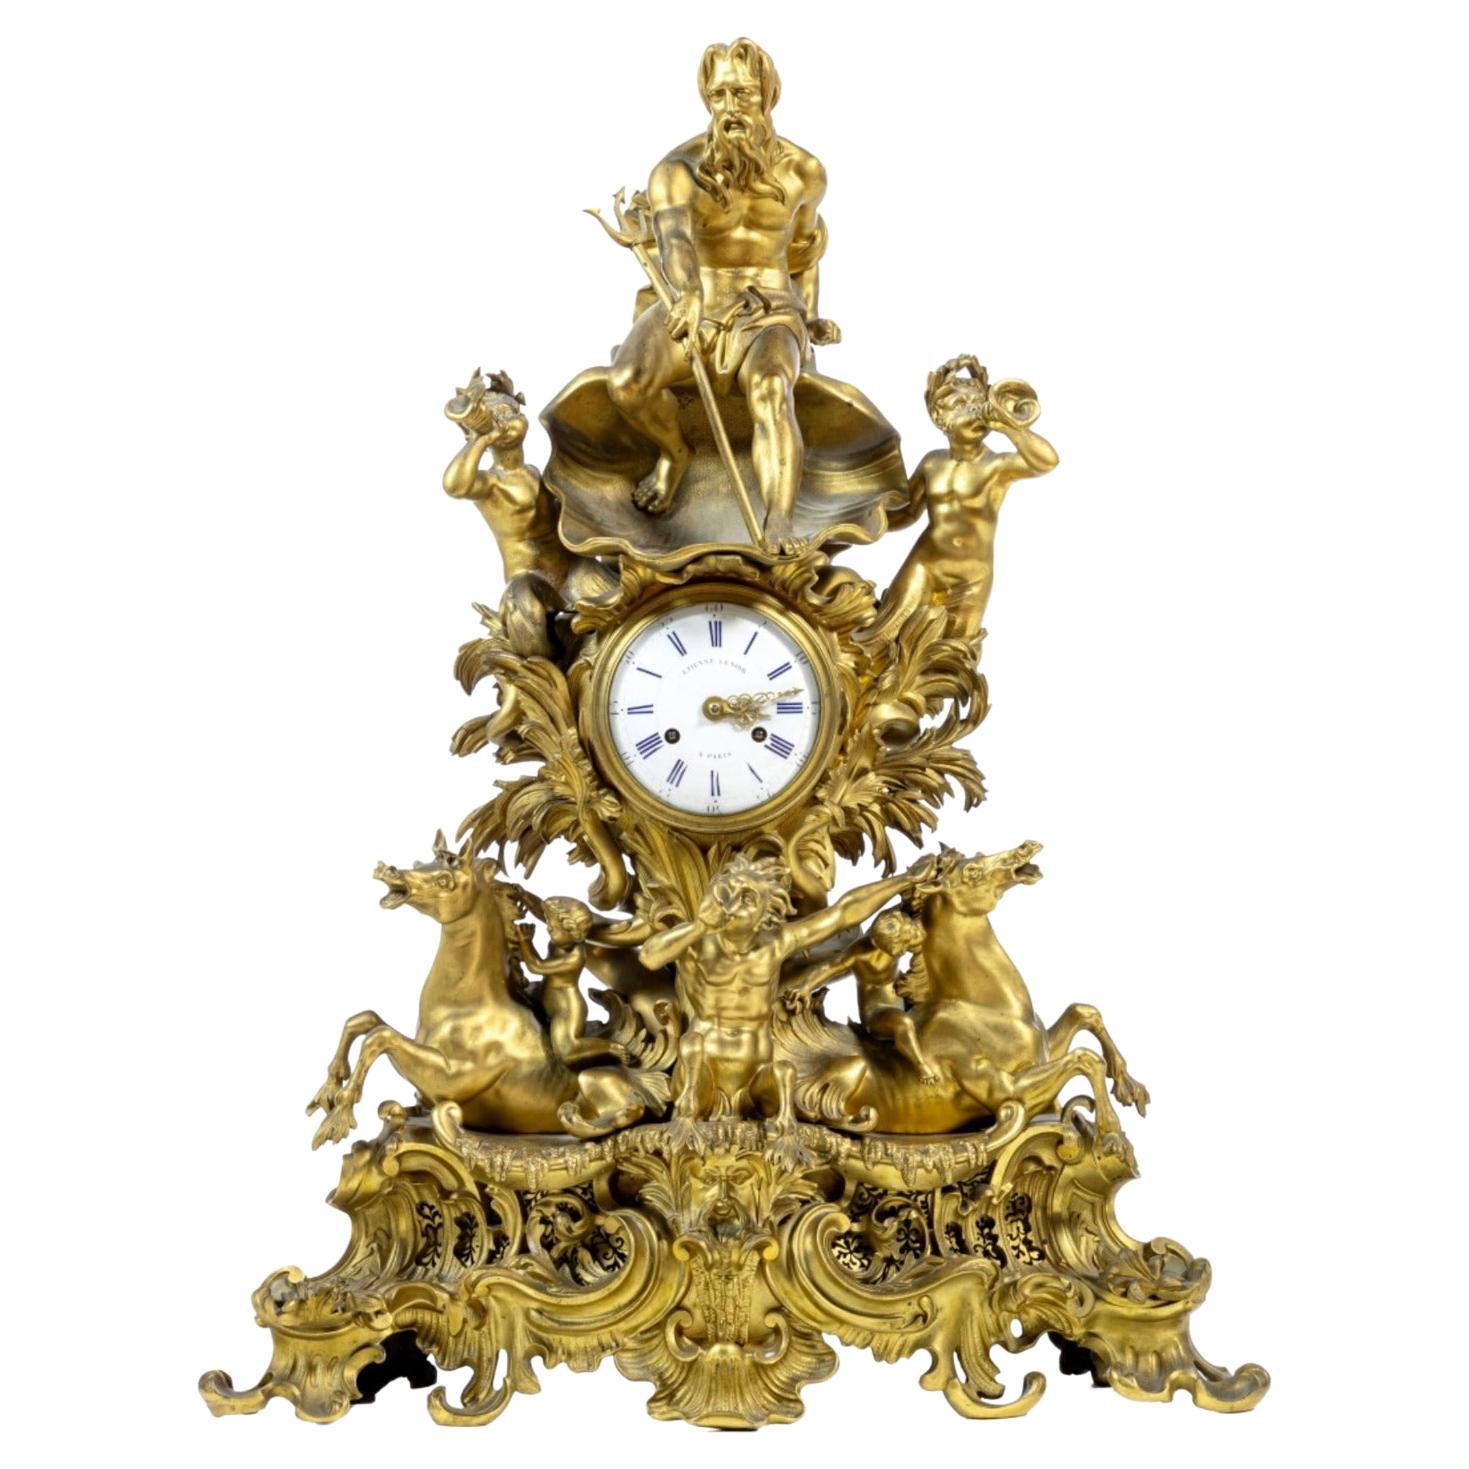 Etienne LeNoir-Uhr aus dem 18. Jahrhundert